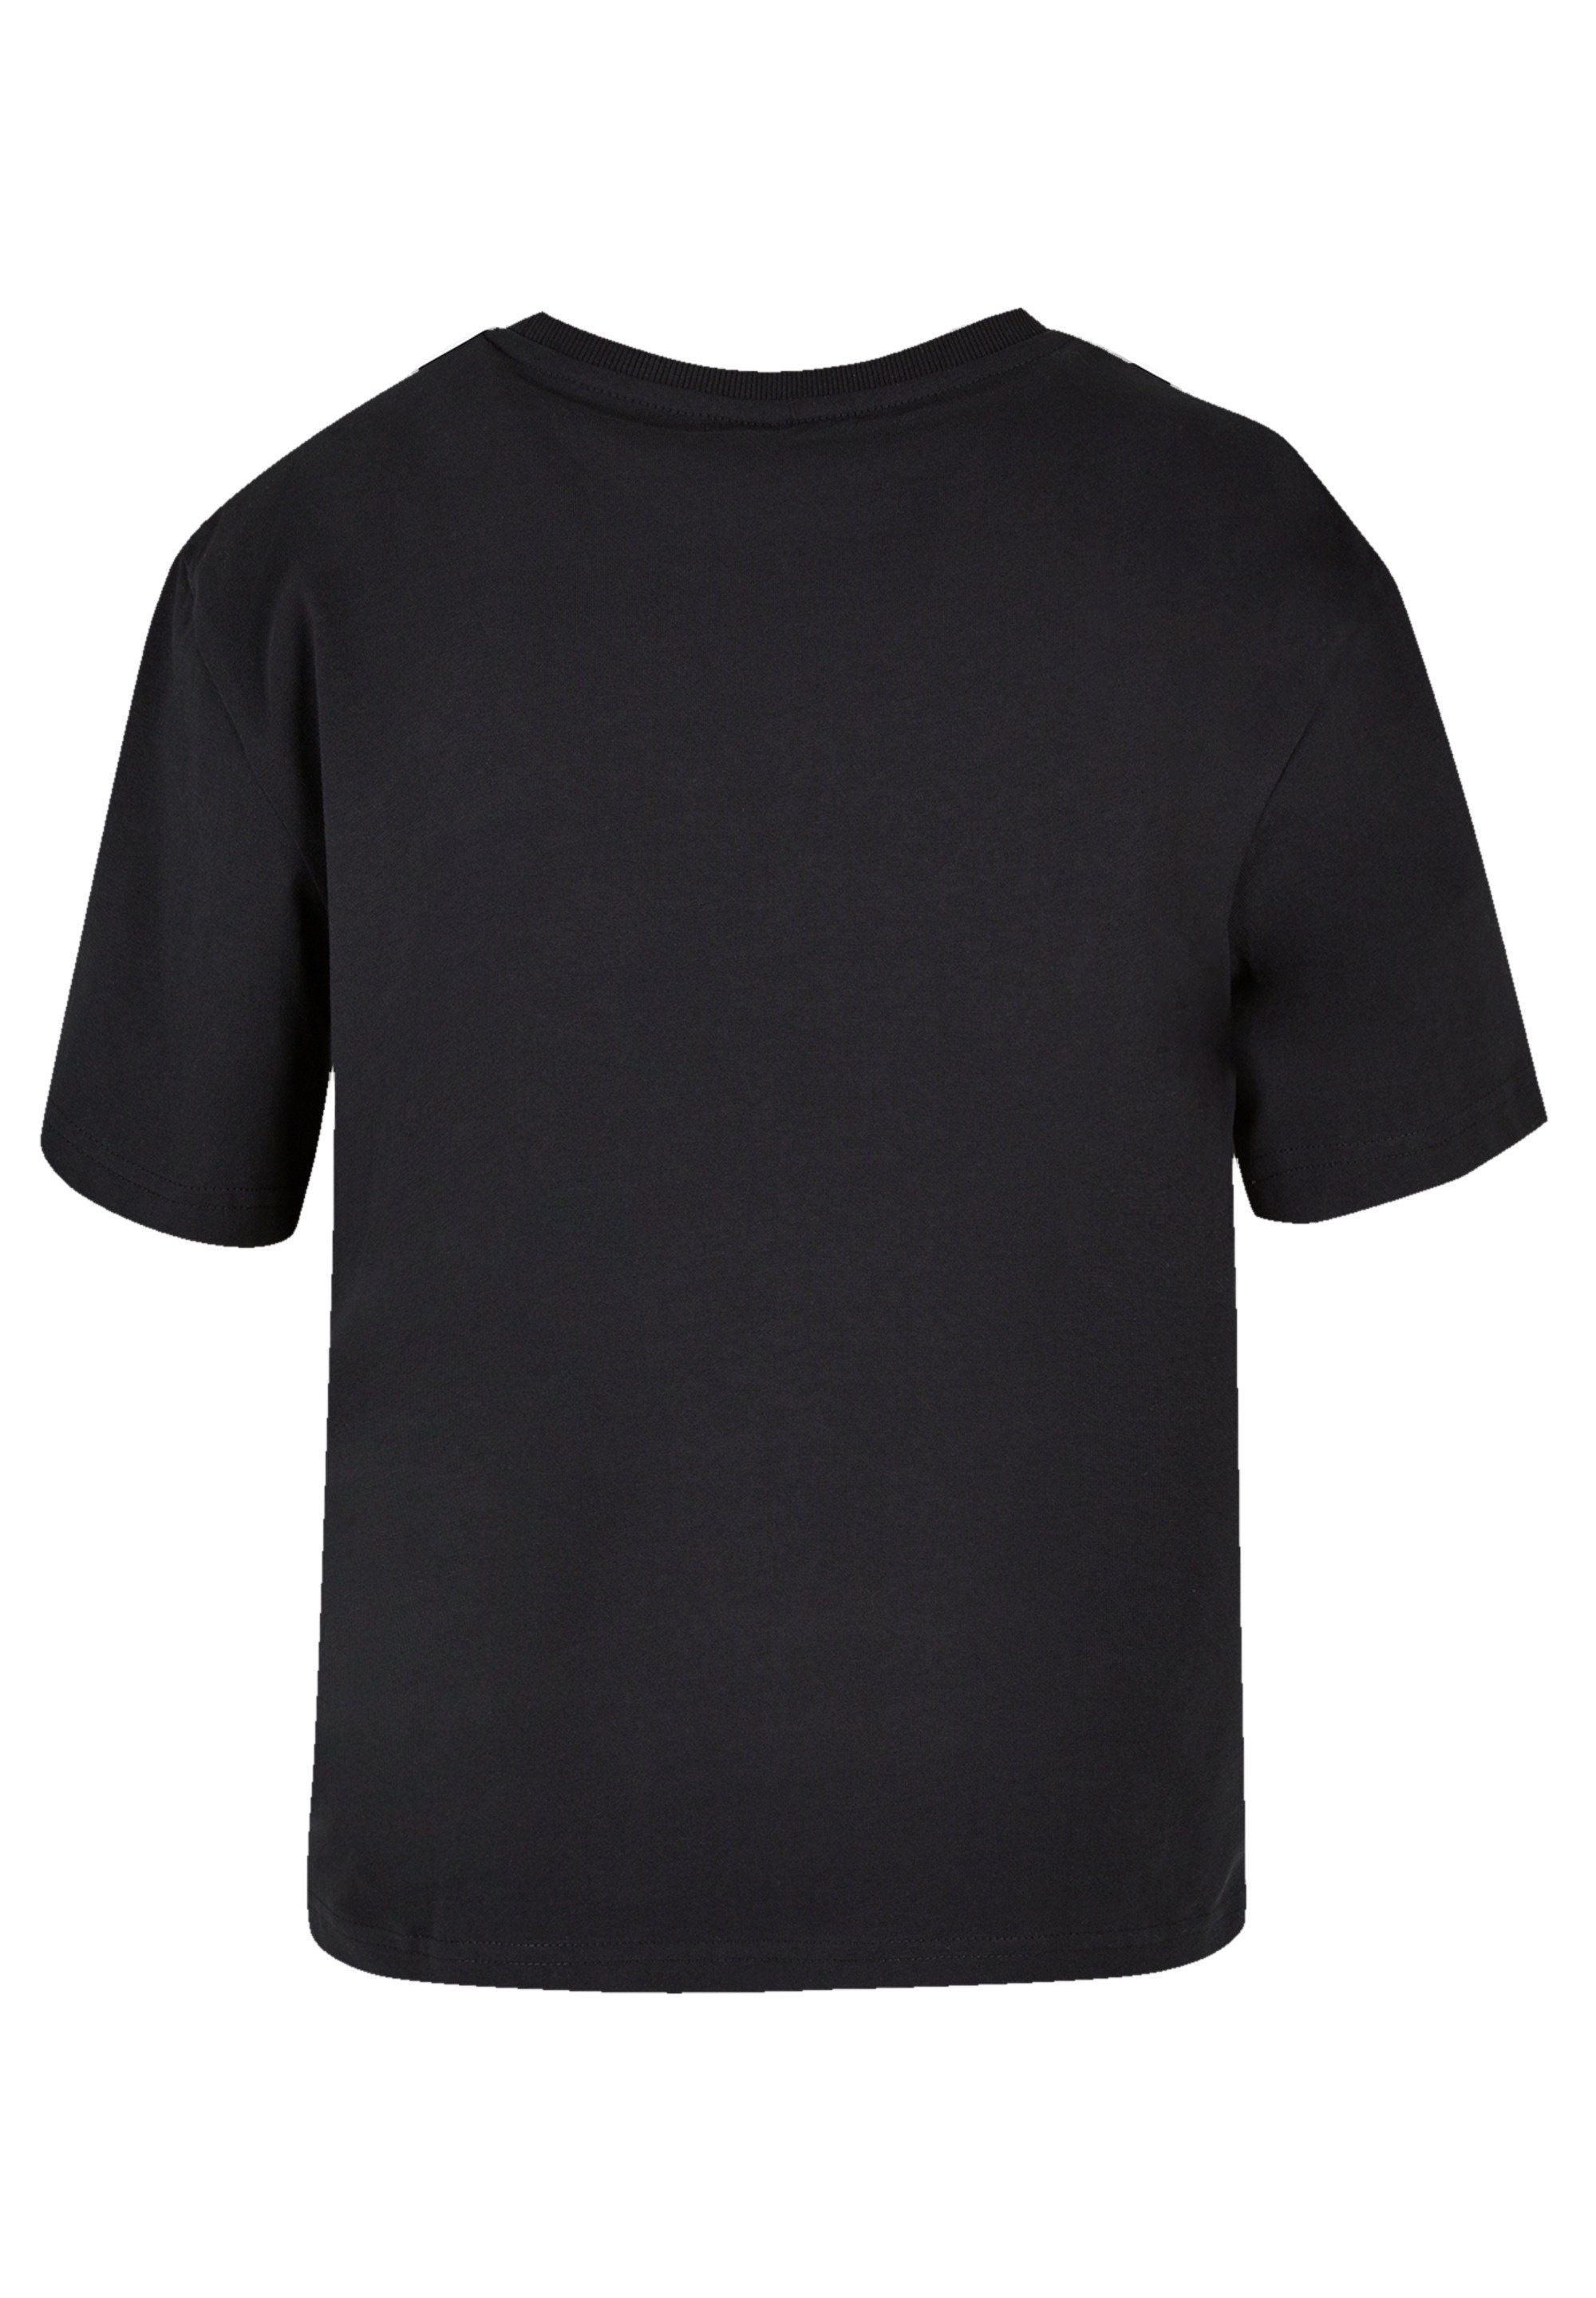 Qualität, Seal T-Shirt F4NT4STIC Rock-Musik Band, Musik Band Red Ramones Rock Premium Text